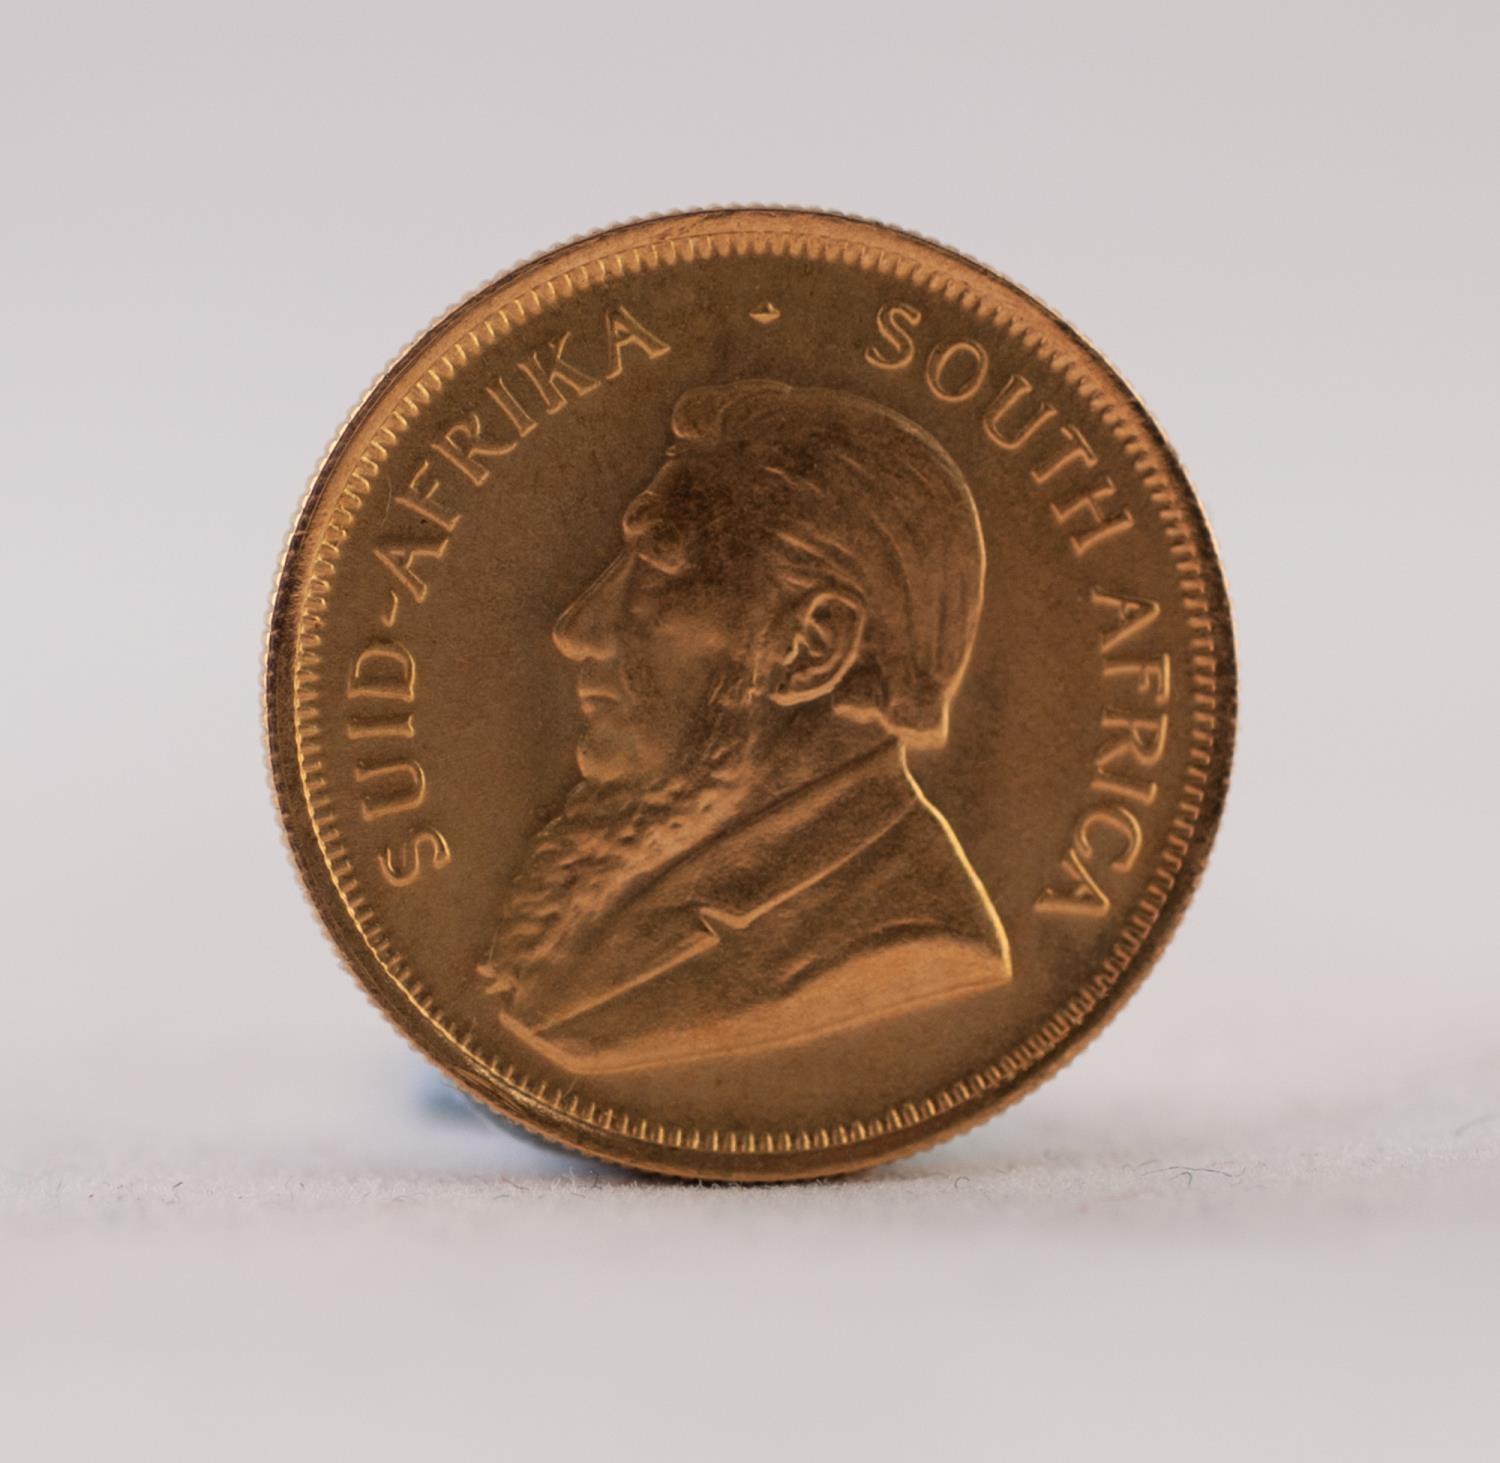 SOUTH AFRICAN 1982 1/4 KRUGERRAND gold coin, 8.5gms (EF) - Image 2 of 2